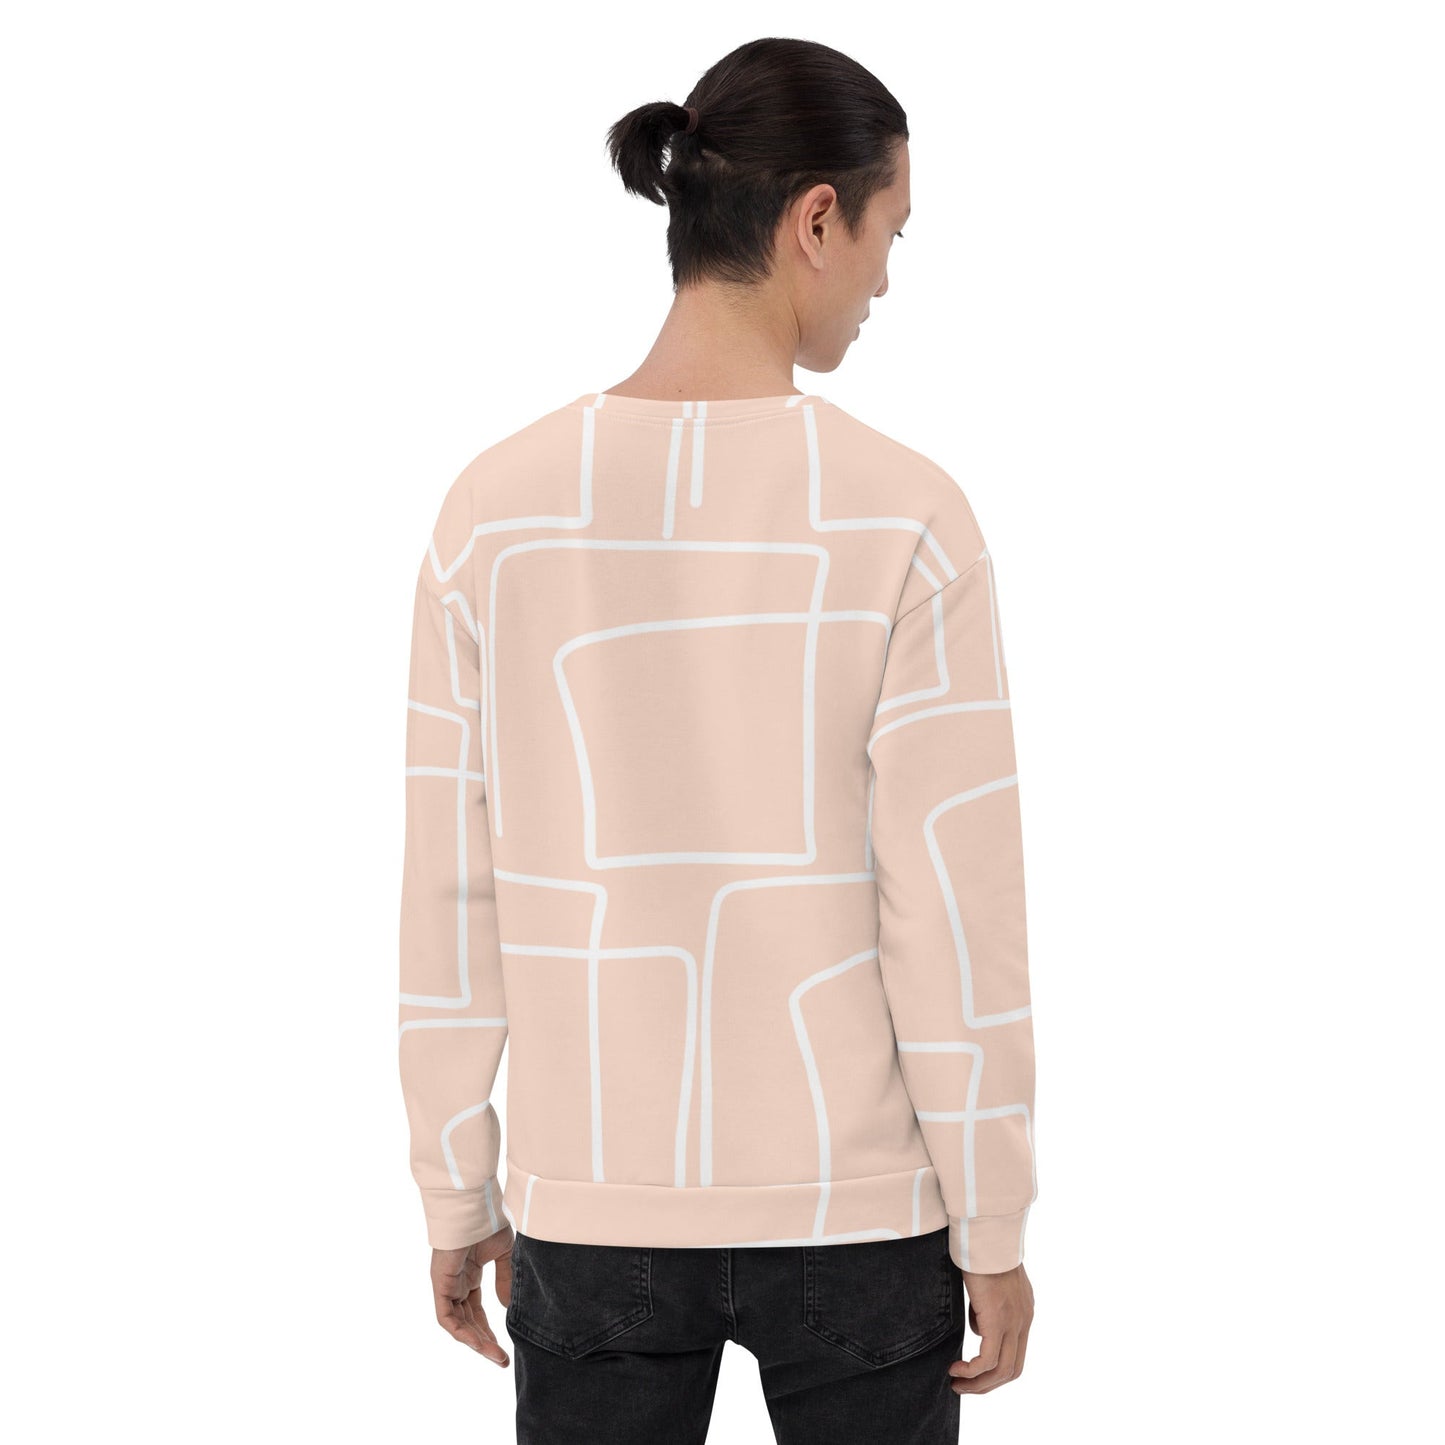 Abstract Grid Unisex Sweatshirt